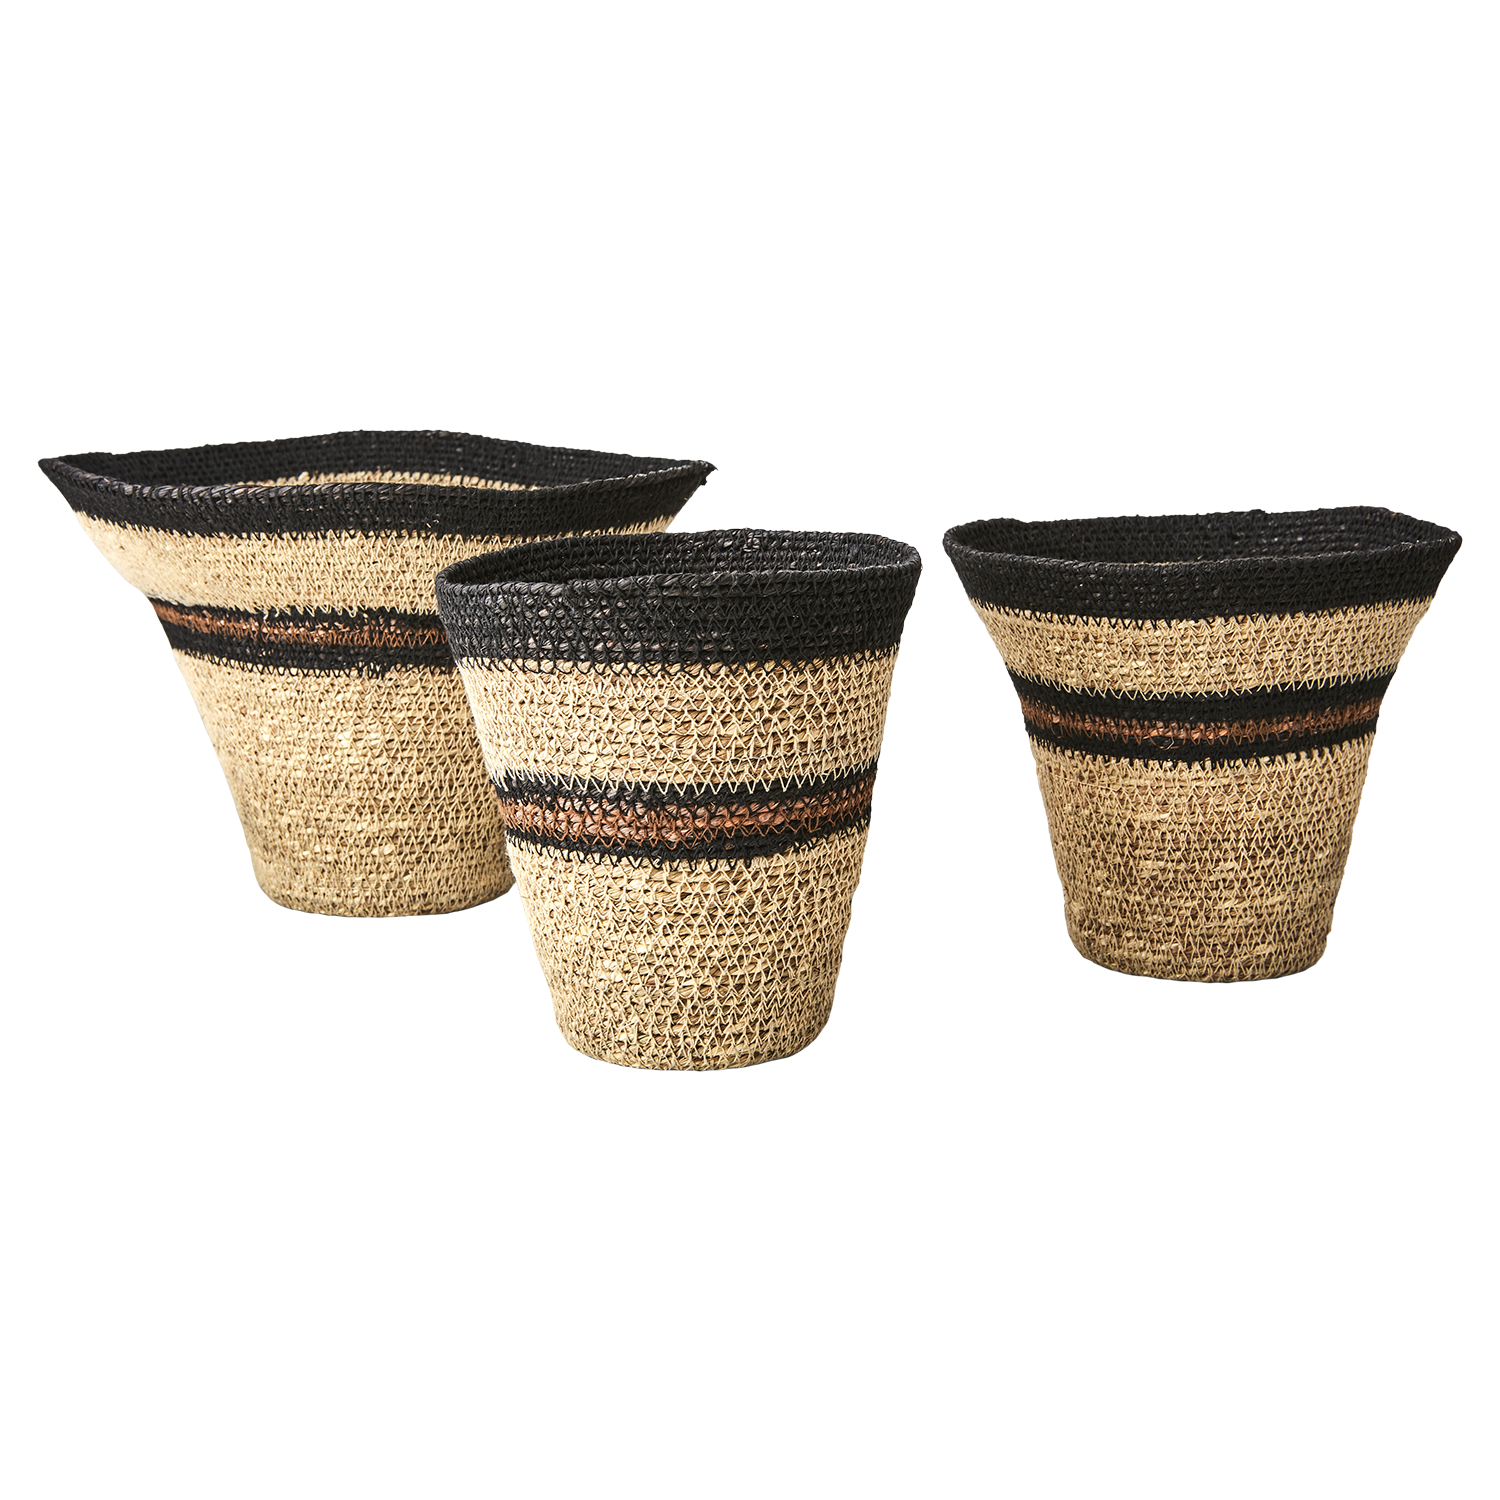 Affari MADIBA Basket, set of 3, Natural/black/brown